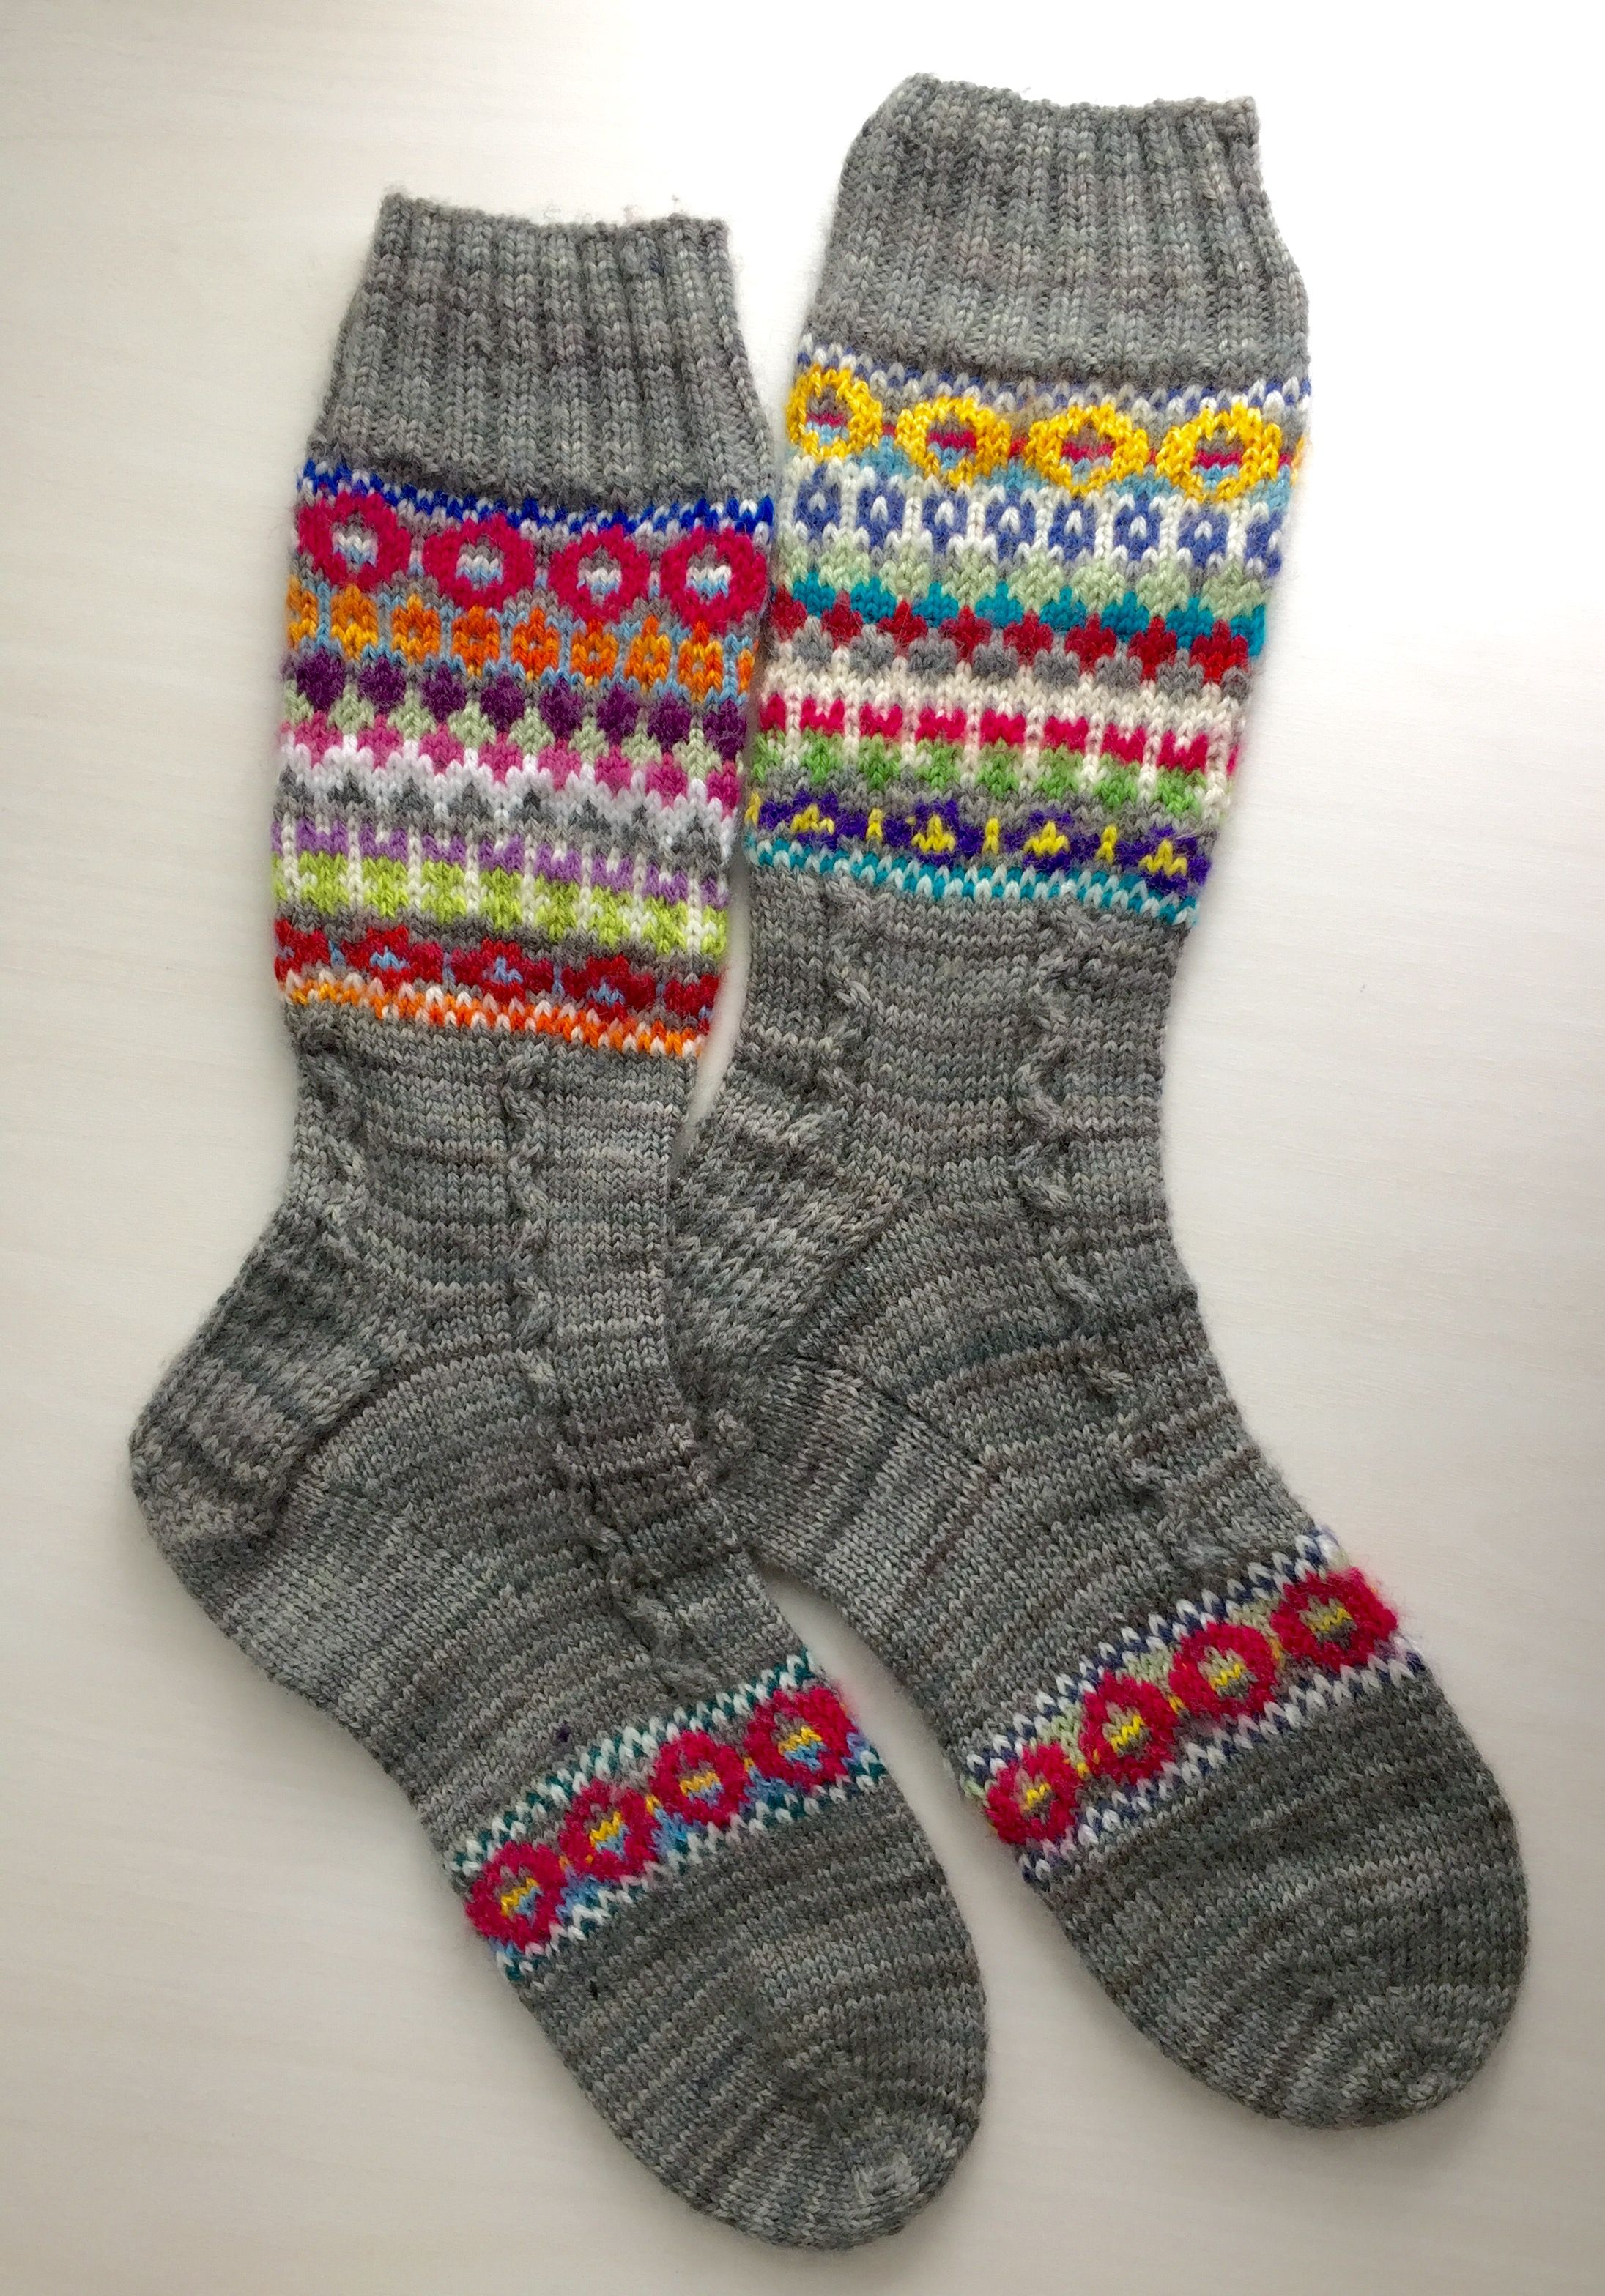 Ravelry Patterns Crochet Hamish Pattern From Ravelry Sock Knitting Pinterest Knitting